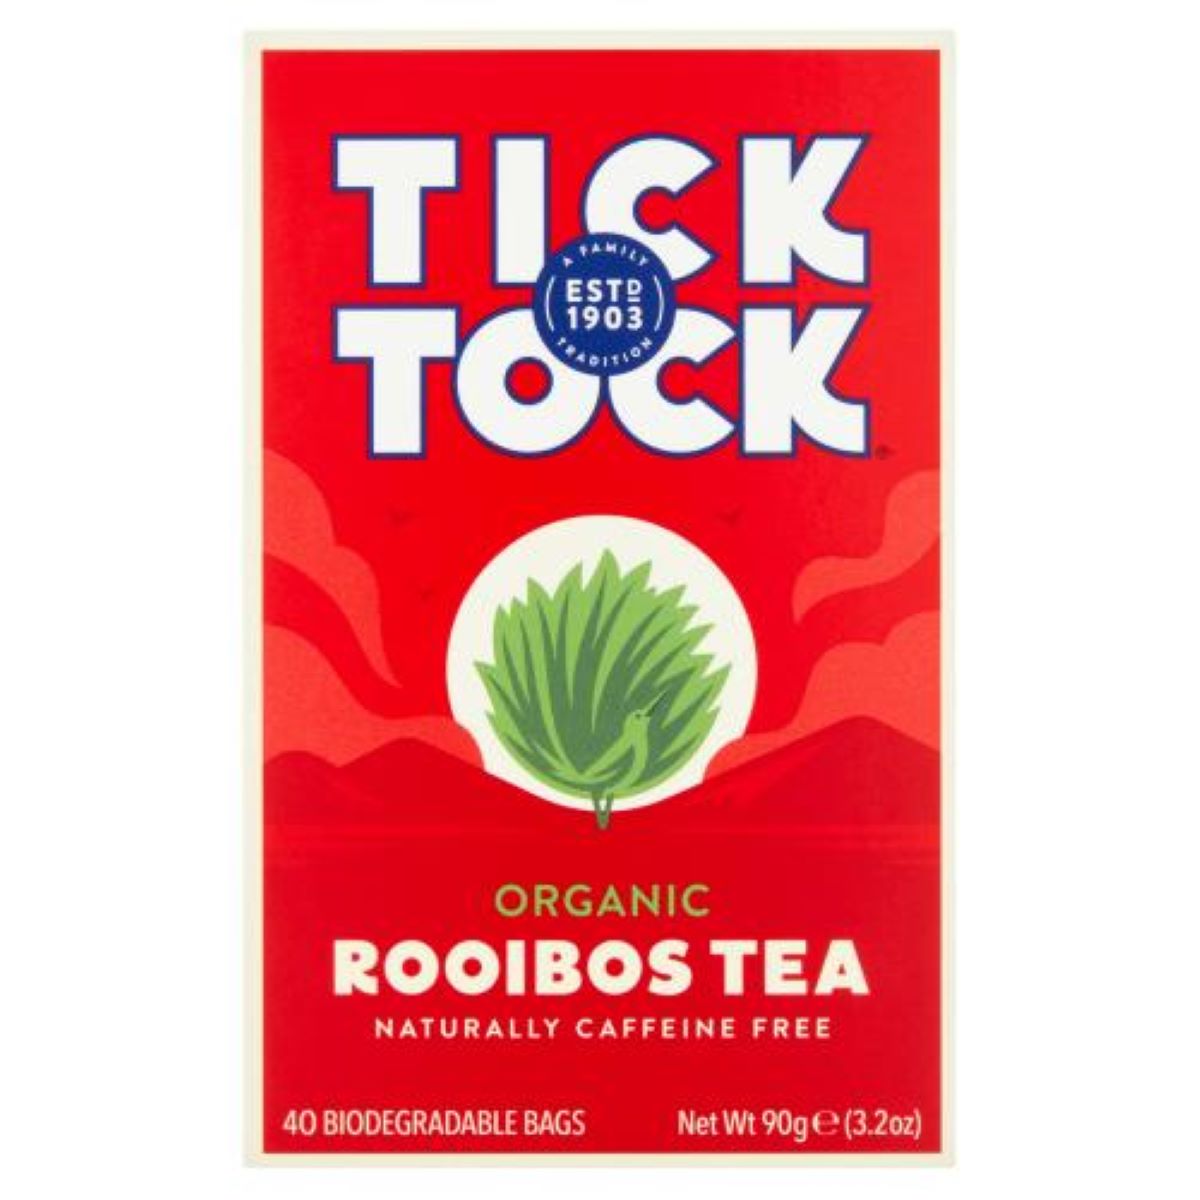 Tick Tock Rooibos Tea Organic 40 Biodegradable Bags 90g